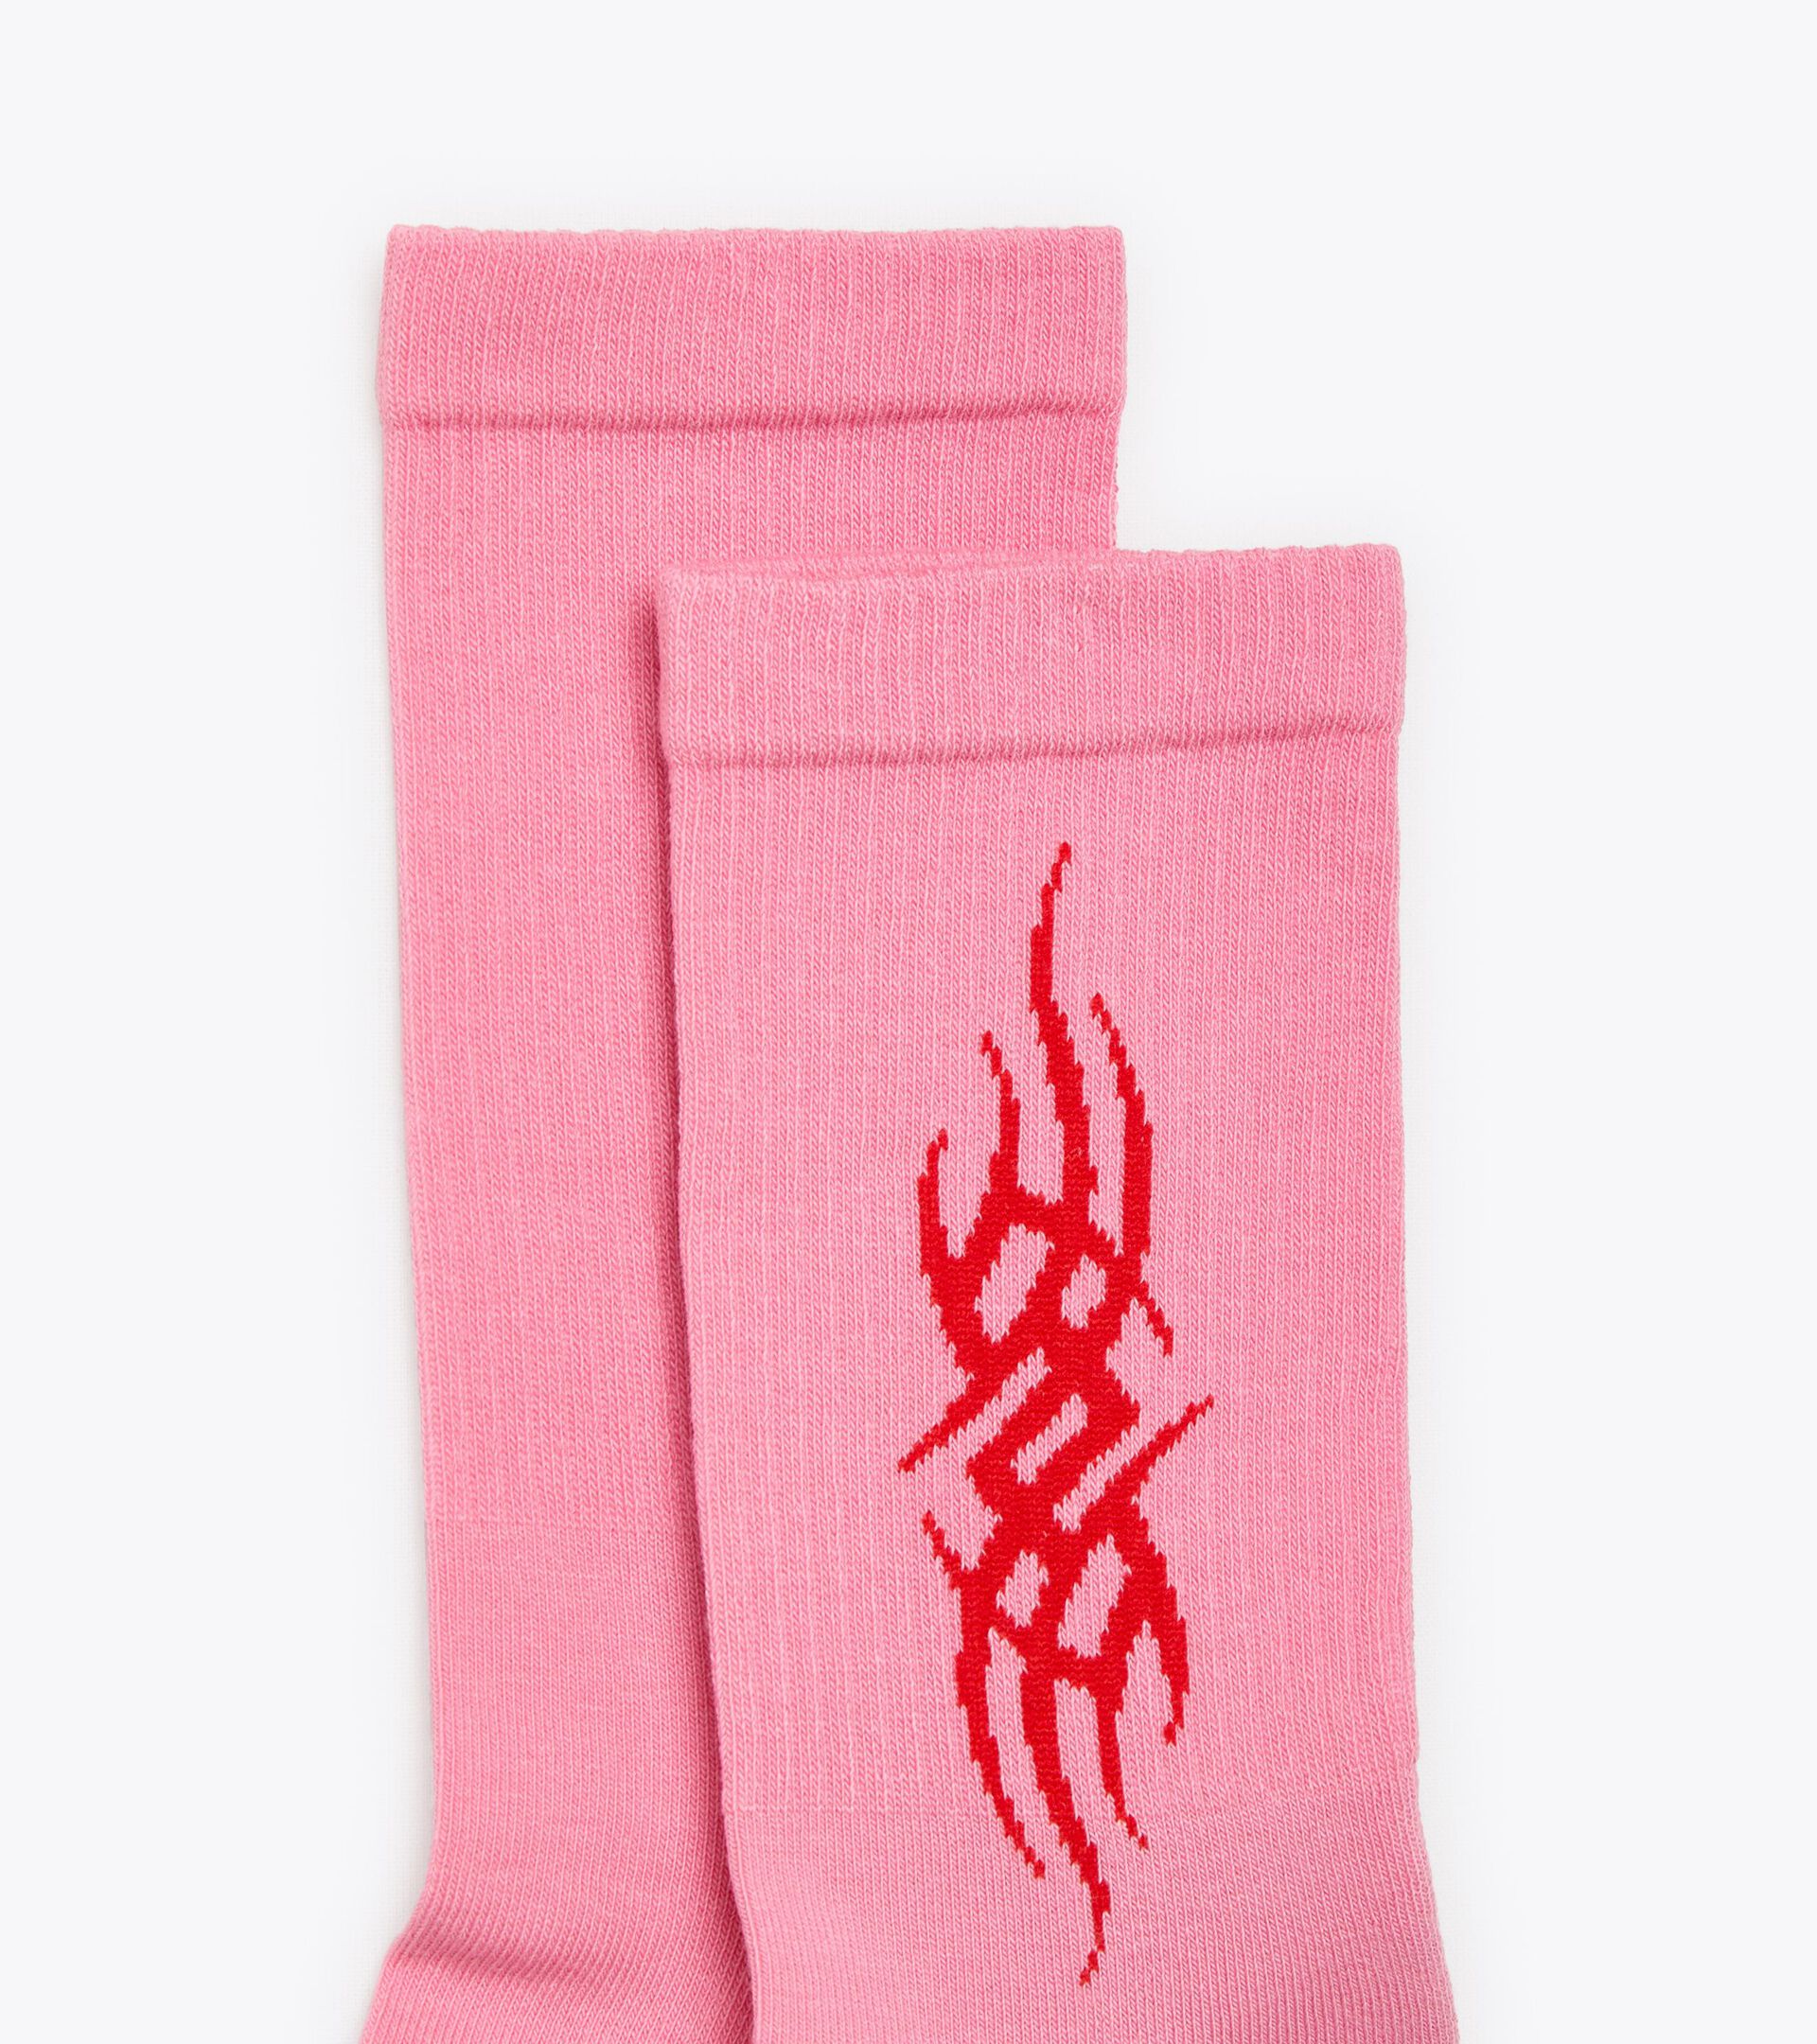 IUTER x diadora x SPECTRUM - Gender neutral socks SOCKS PIRATI PINK ORCHID - Diadora